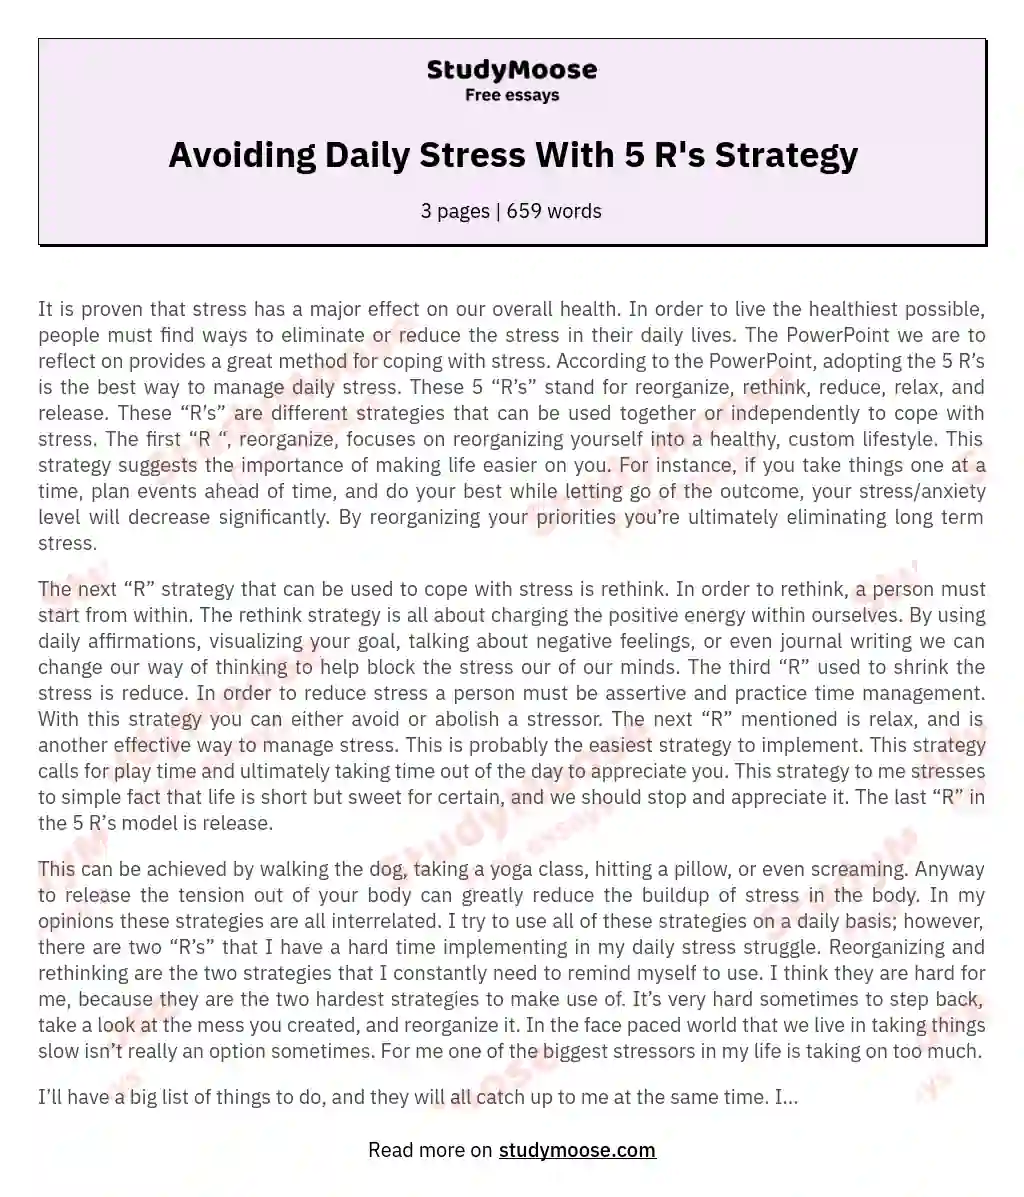 Avoiding Daily Stress With 5 R's Strategy essay